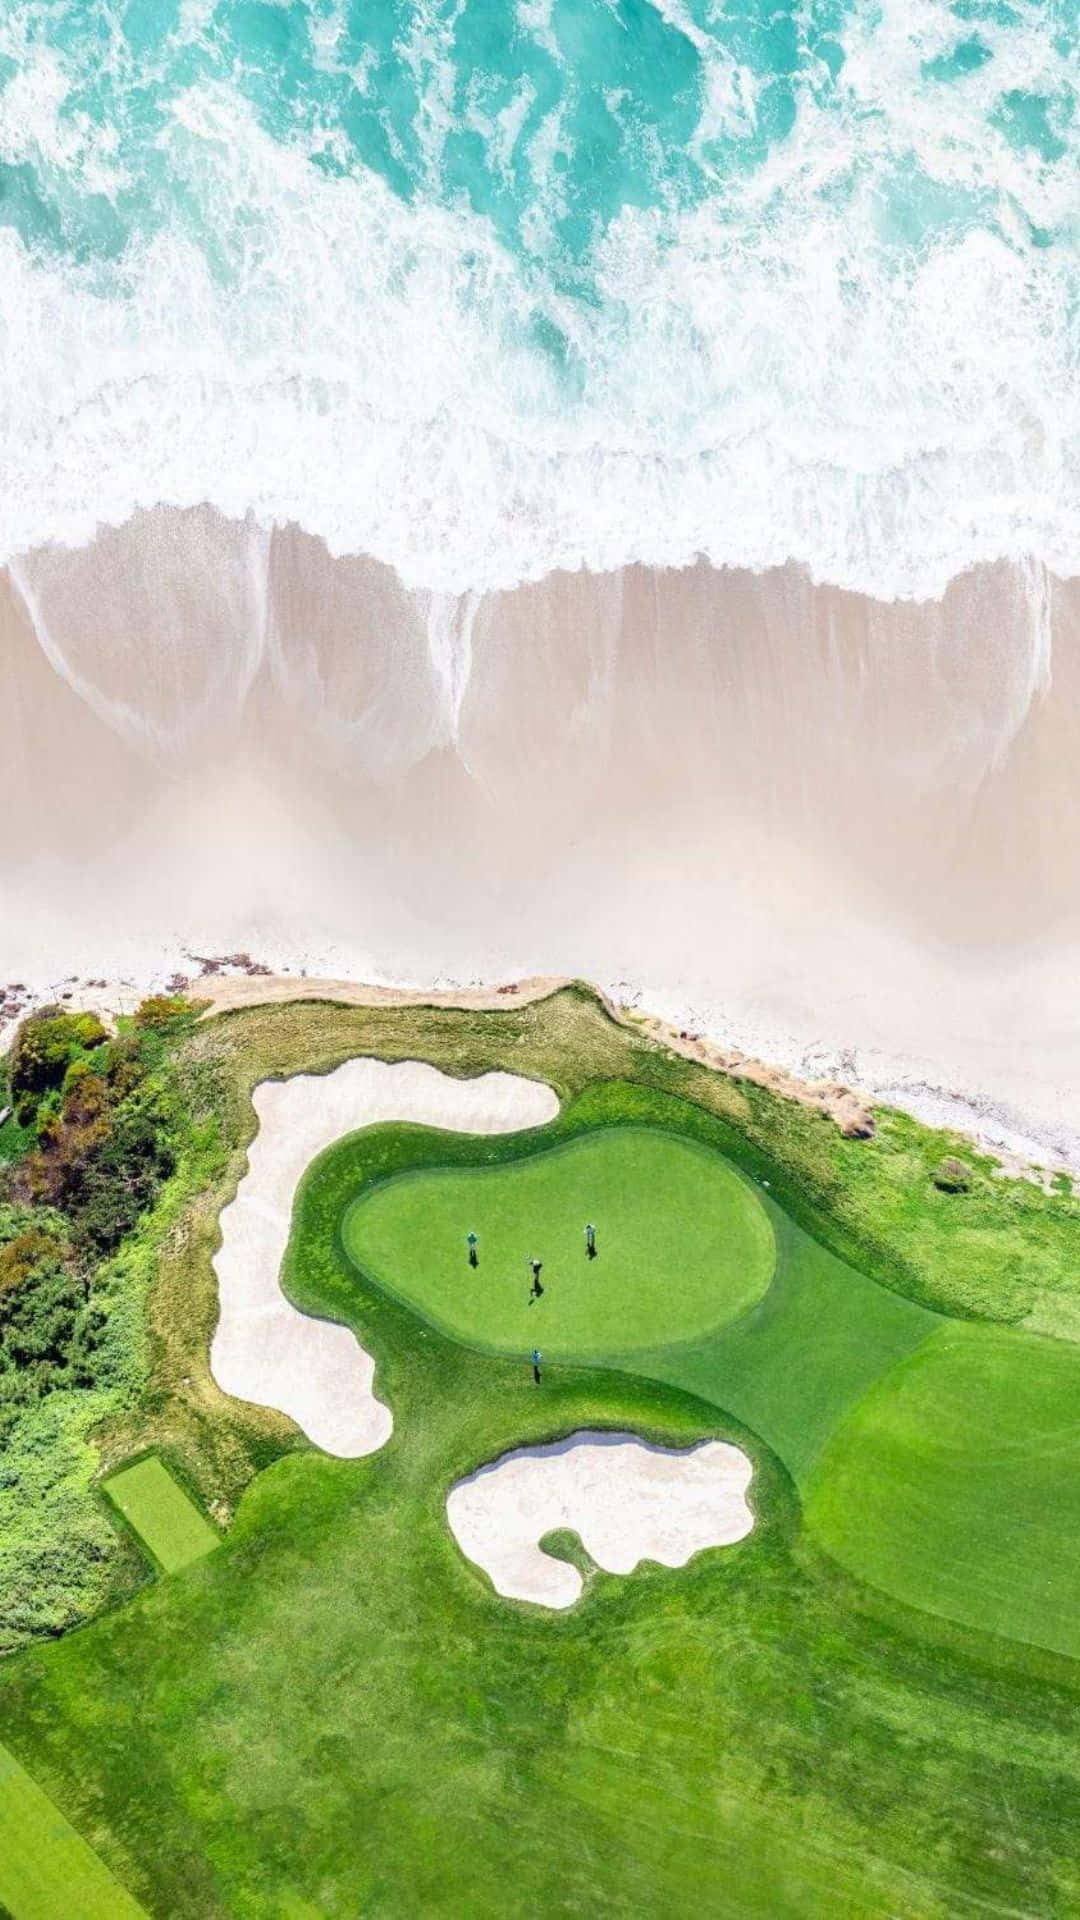 California's Pebble Beach Hd Golf Course Background